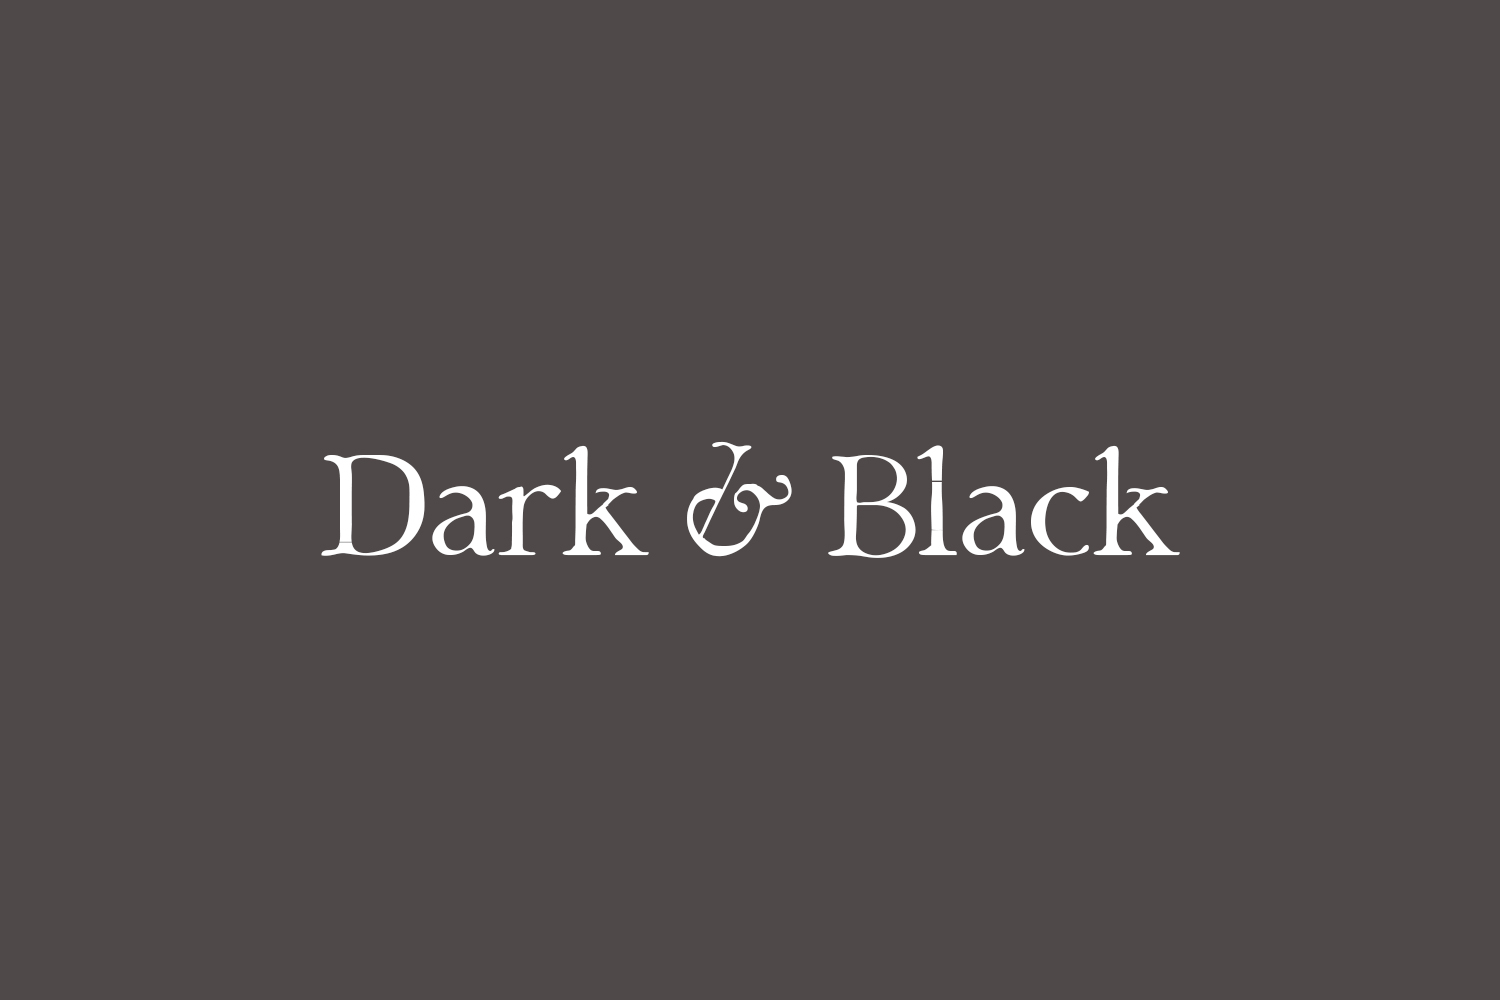 Dark & Black Free Font